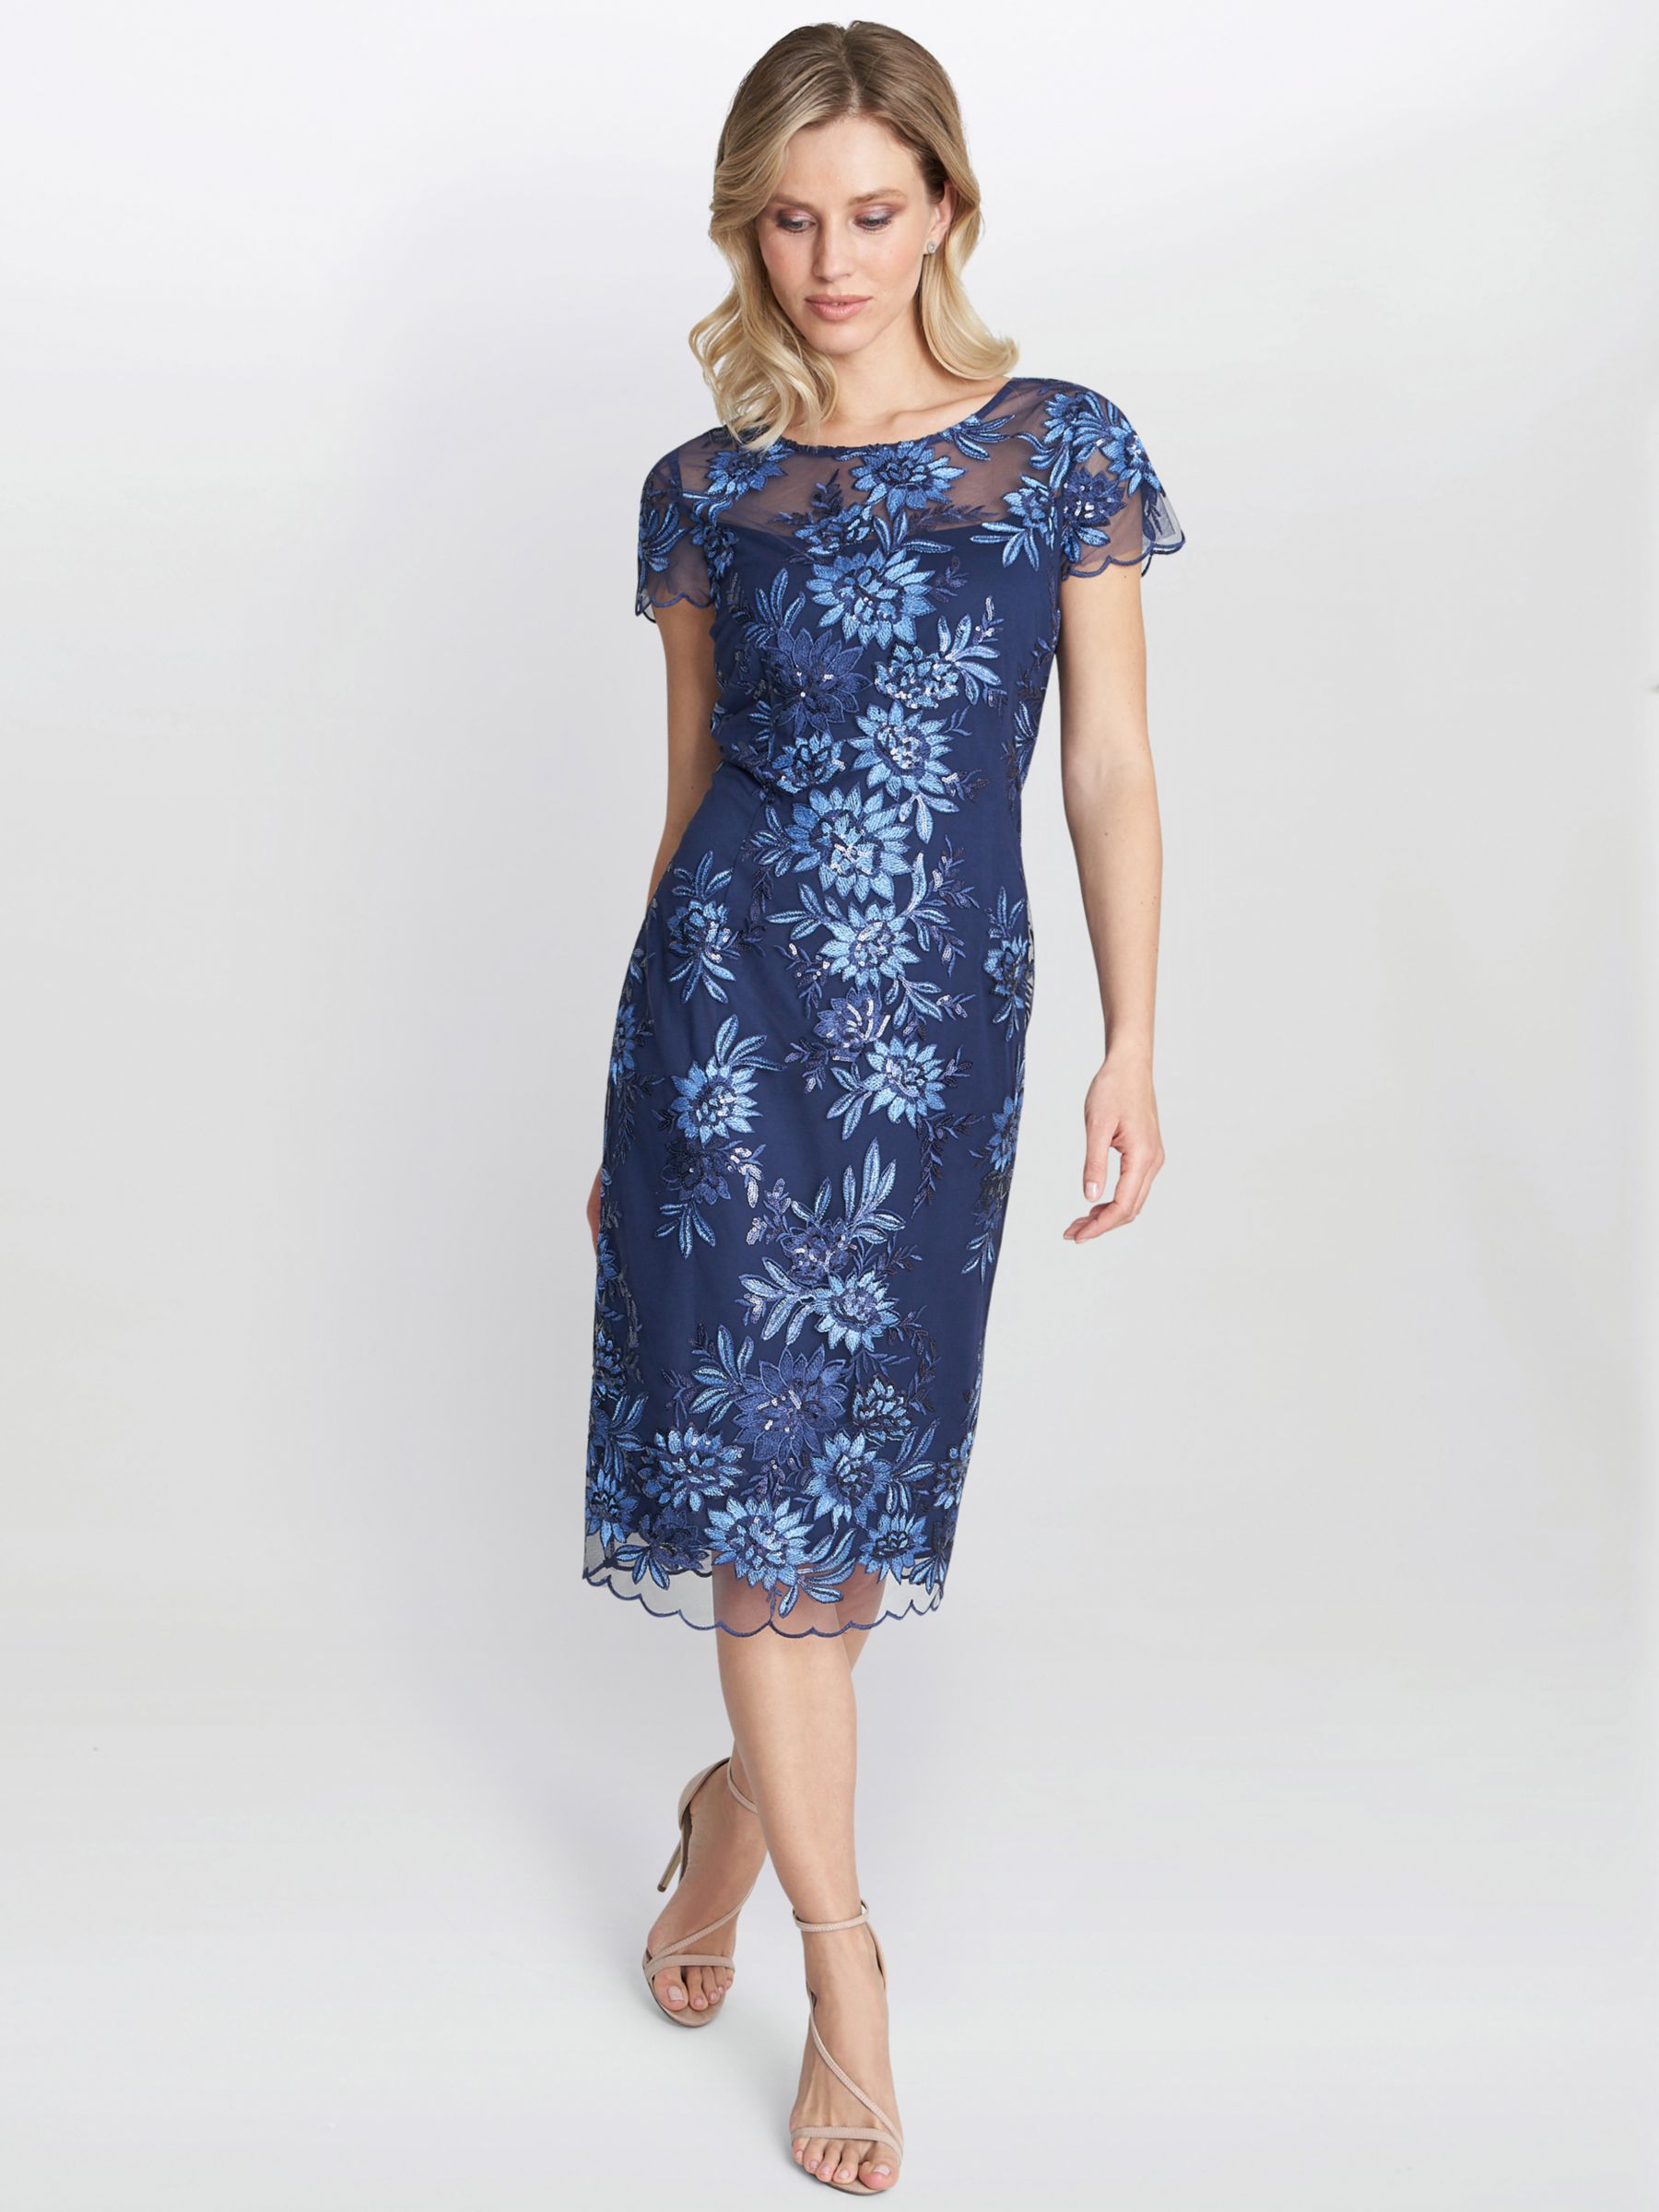 Gina Bacconi Edna Embroidered Dress, Navy, 20